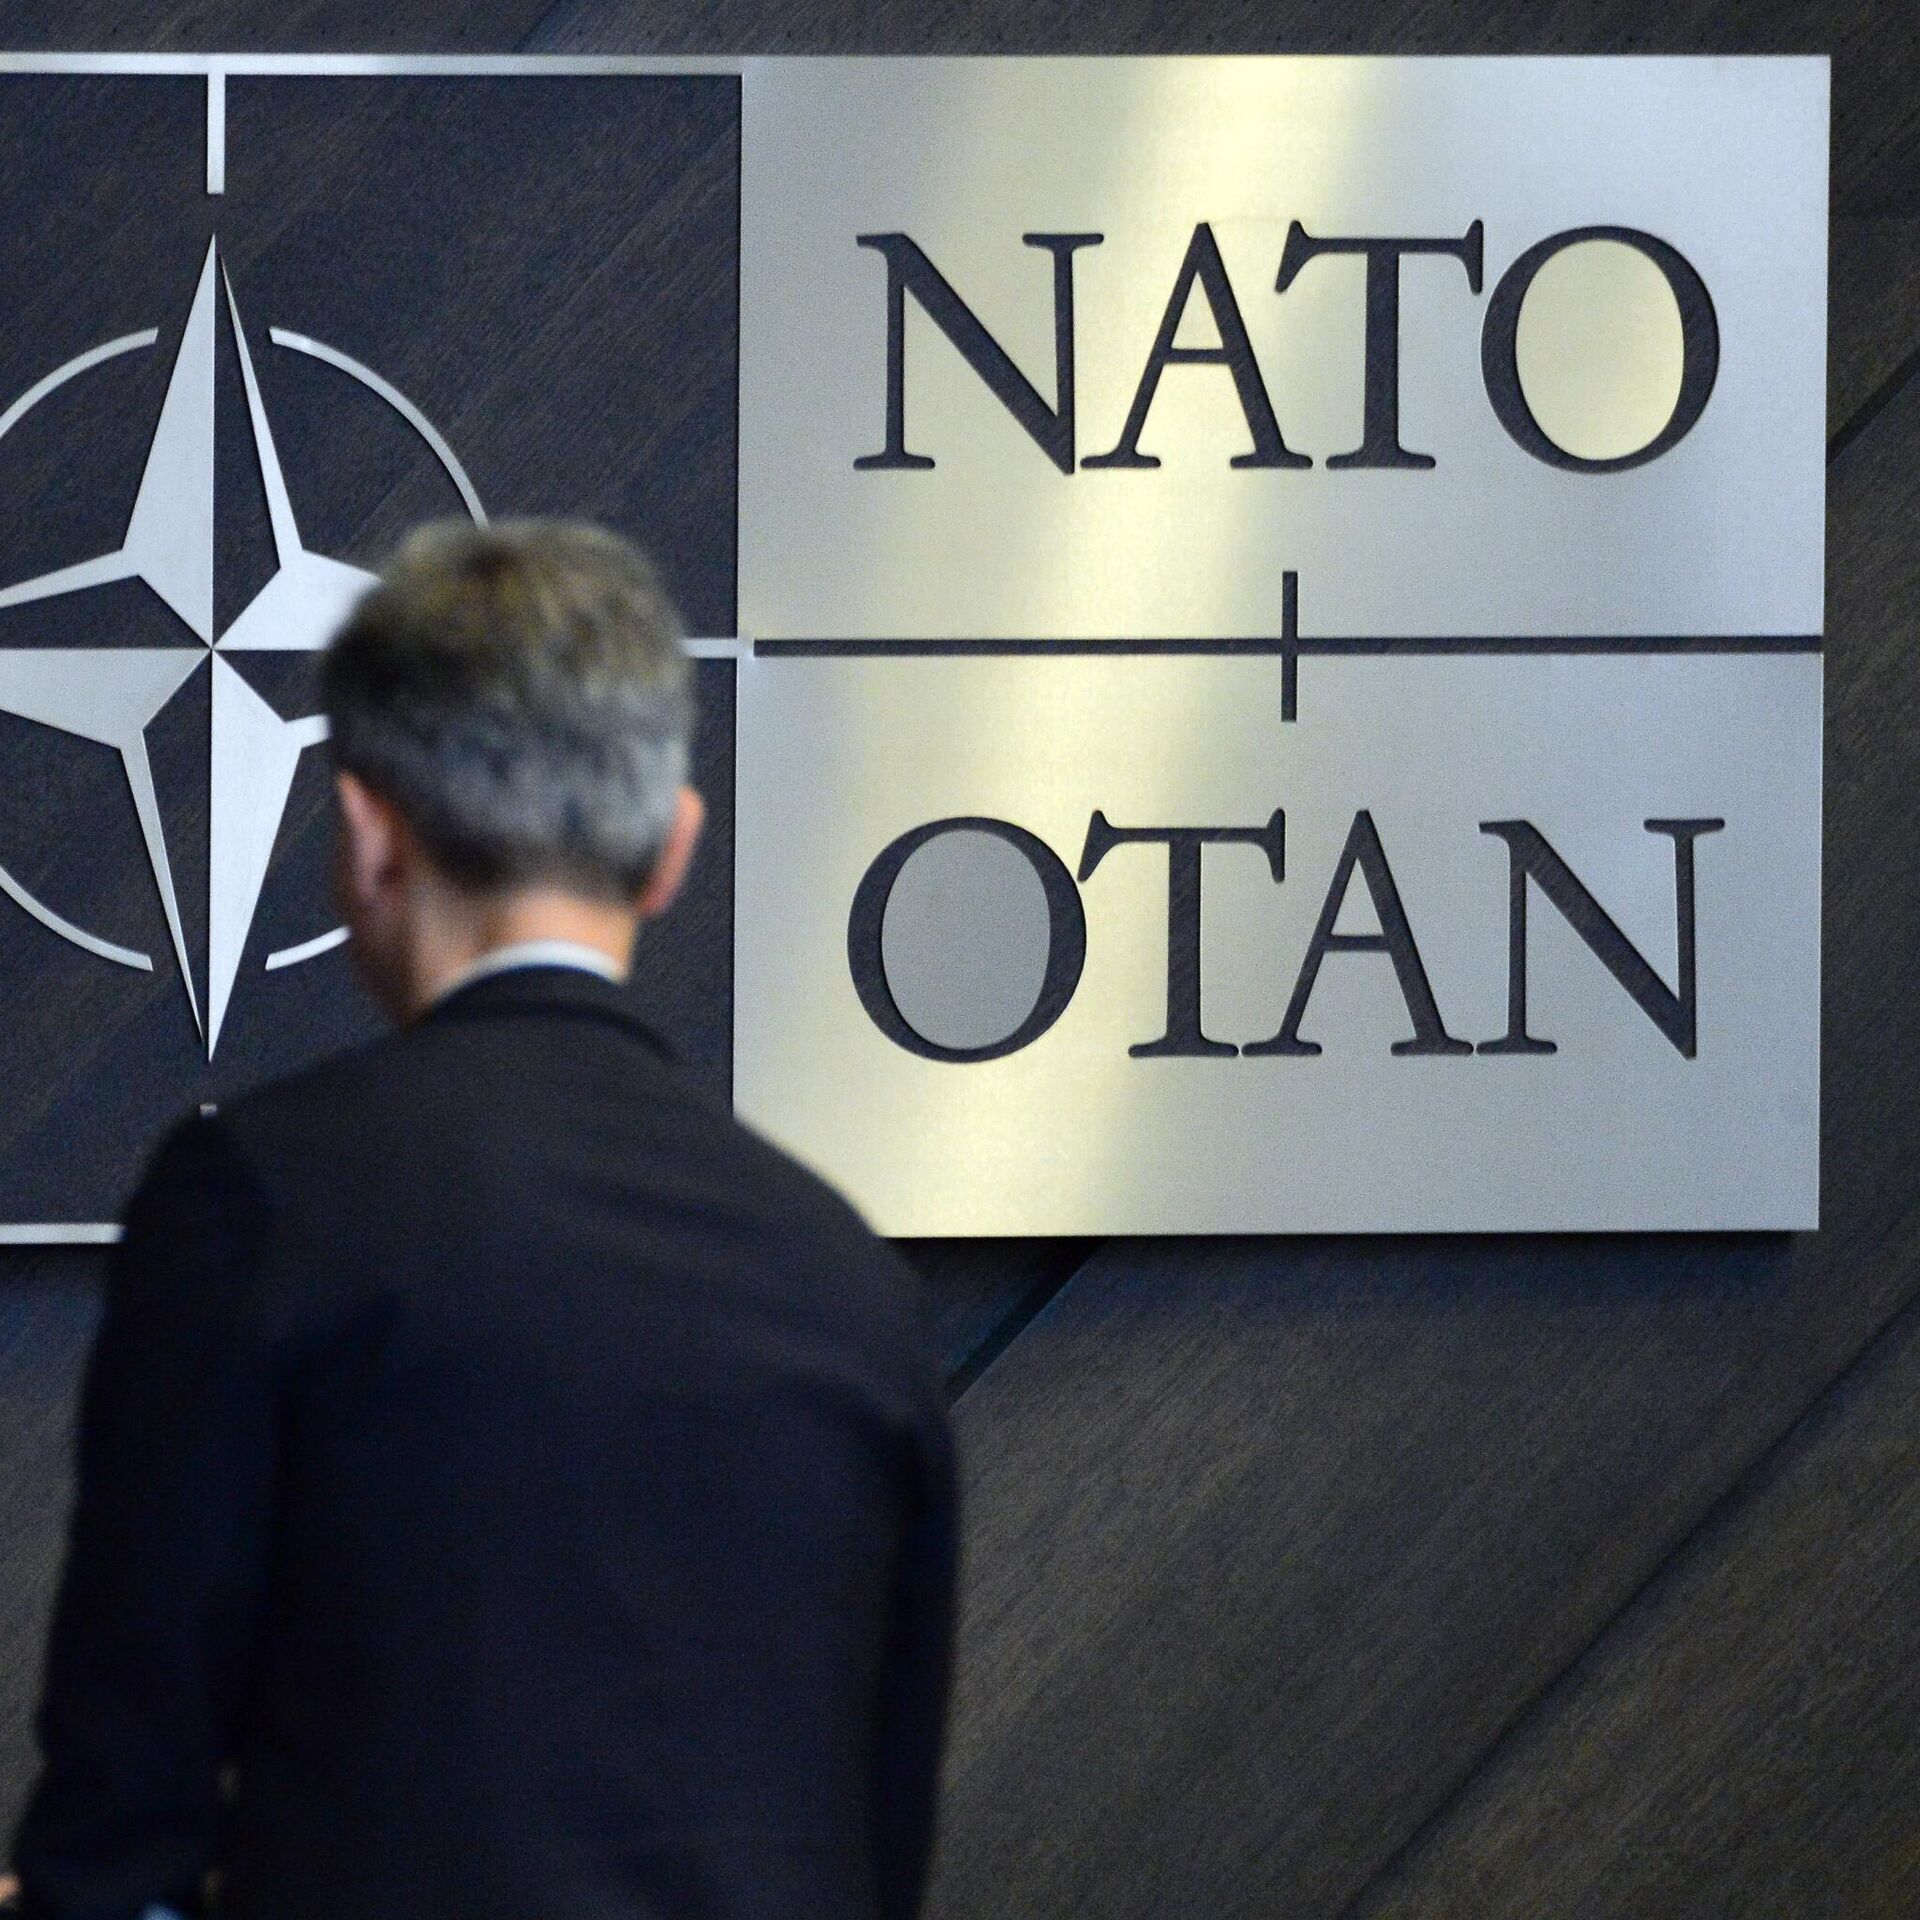 Статья 5 устава нато. Эмблема саммита НАТО. Эмблема саммита НАТО В Вильнюсе. Саммит НАТО распахнула кофту. Эмблема НАТО В размытии.